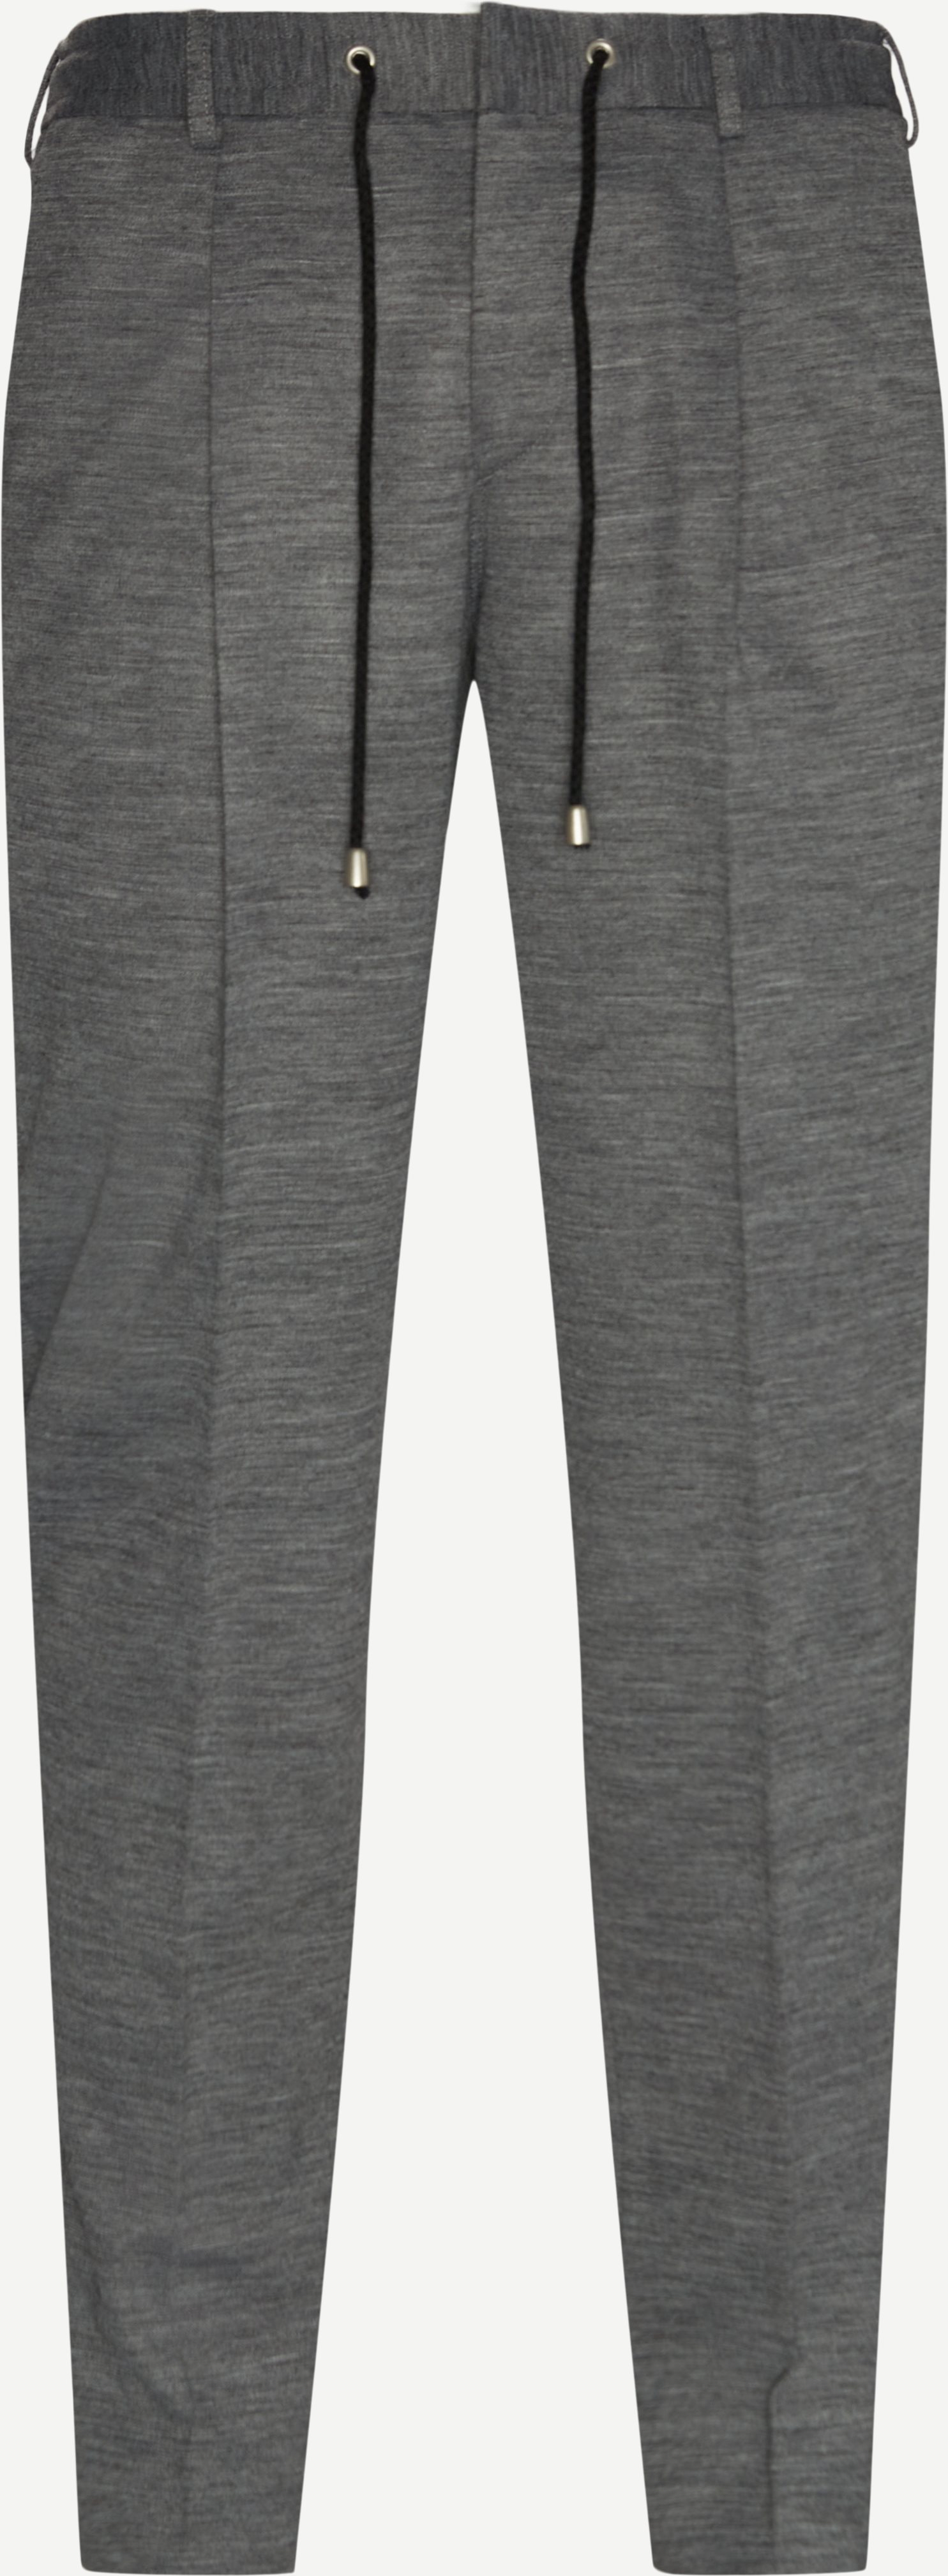 1662 Mark String Pants - Trousers - Slim fit - Grey